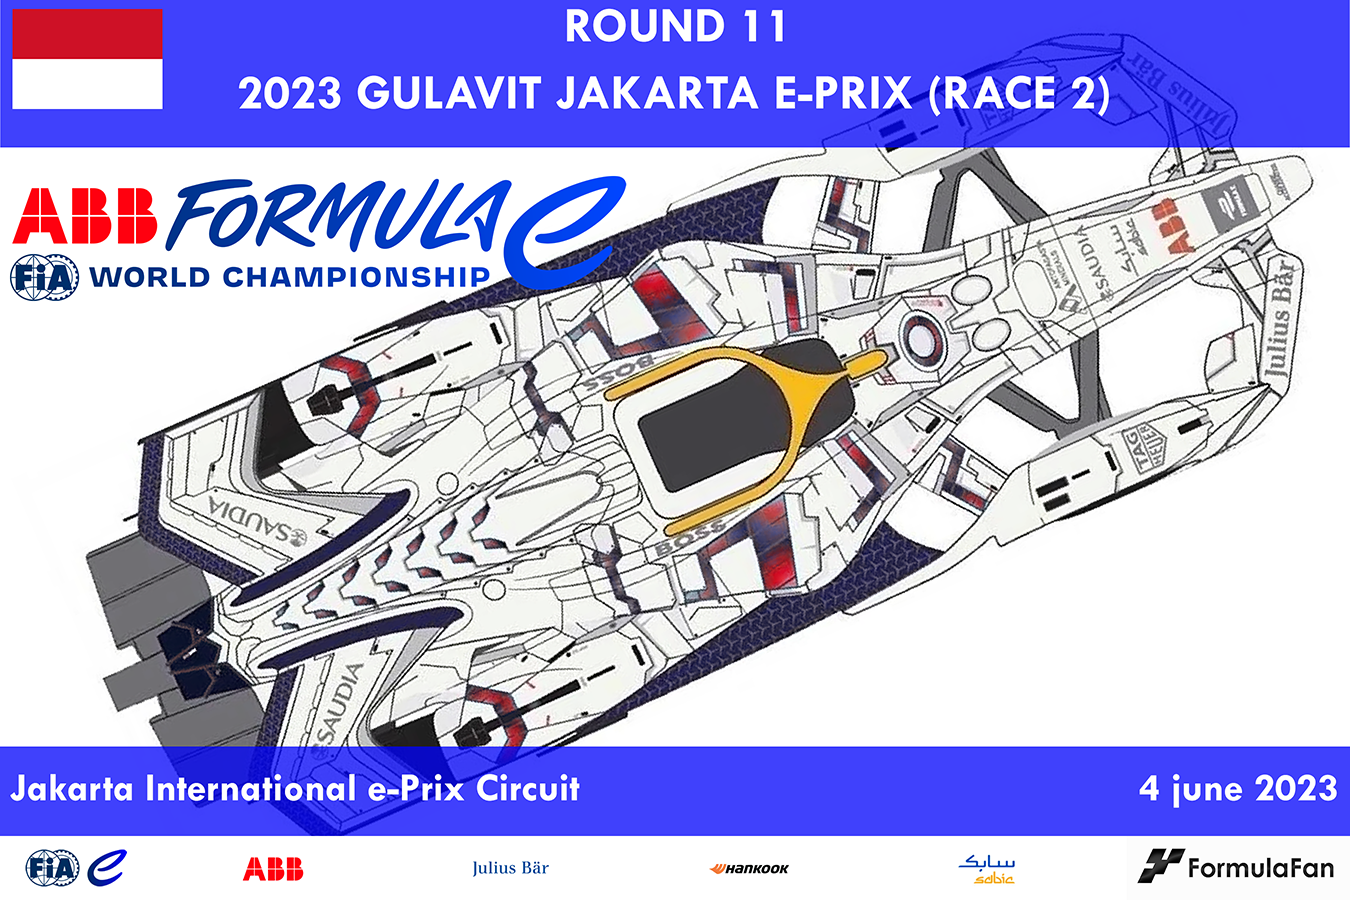 E-Prix Джакарты 2023 (гонка 2) | 2023 AAB FIA Formula E Gulavit Jakarta E-Prix Race 2